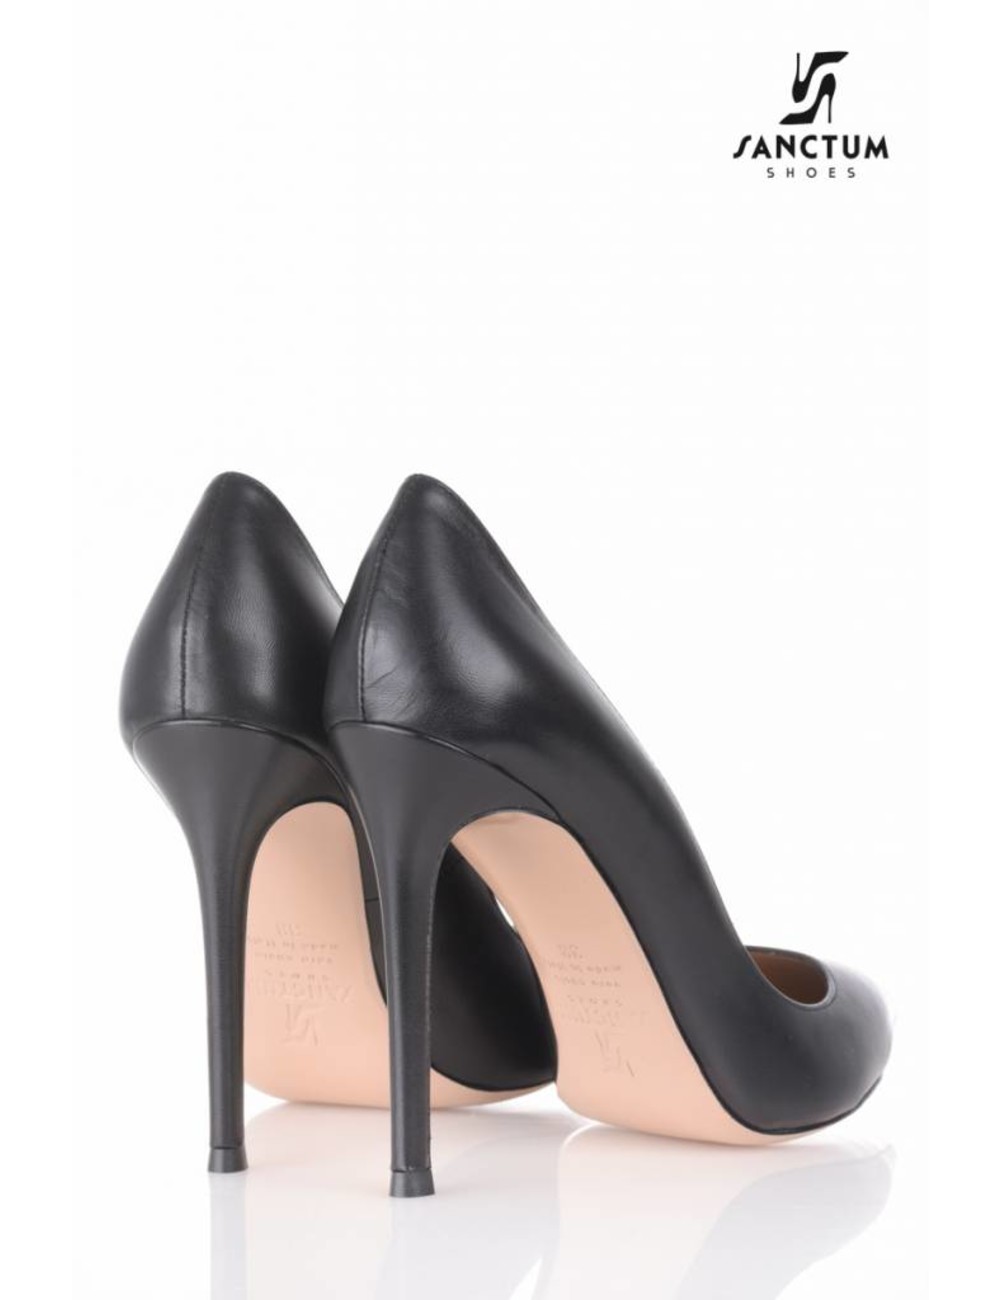 Italian pumps with thin heels - Italian Heels Sanctum Shoes